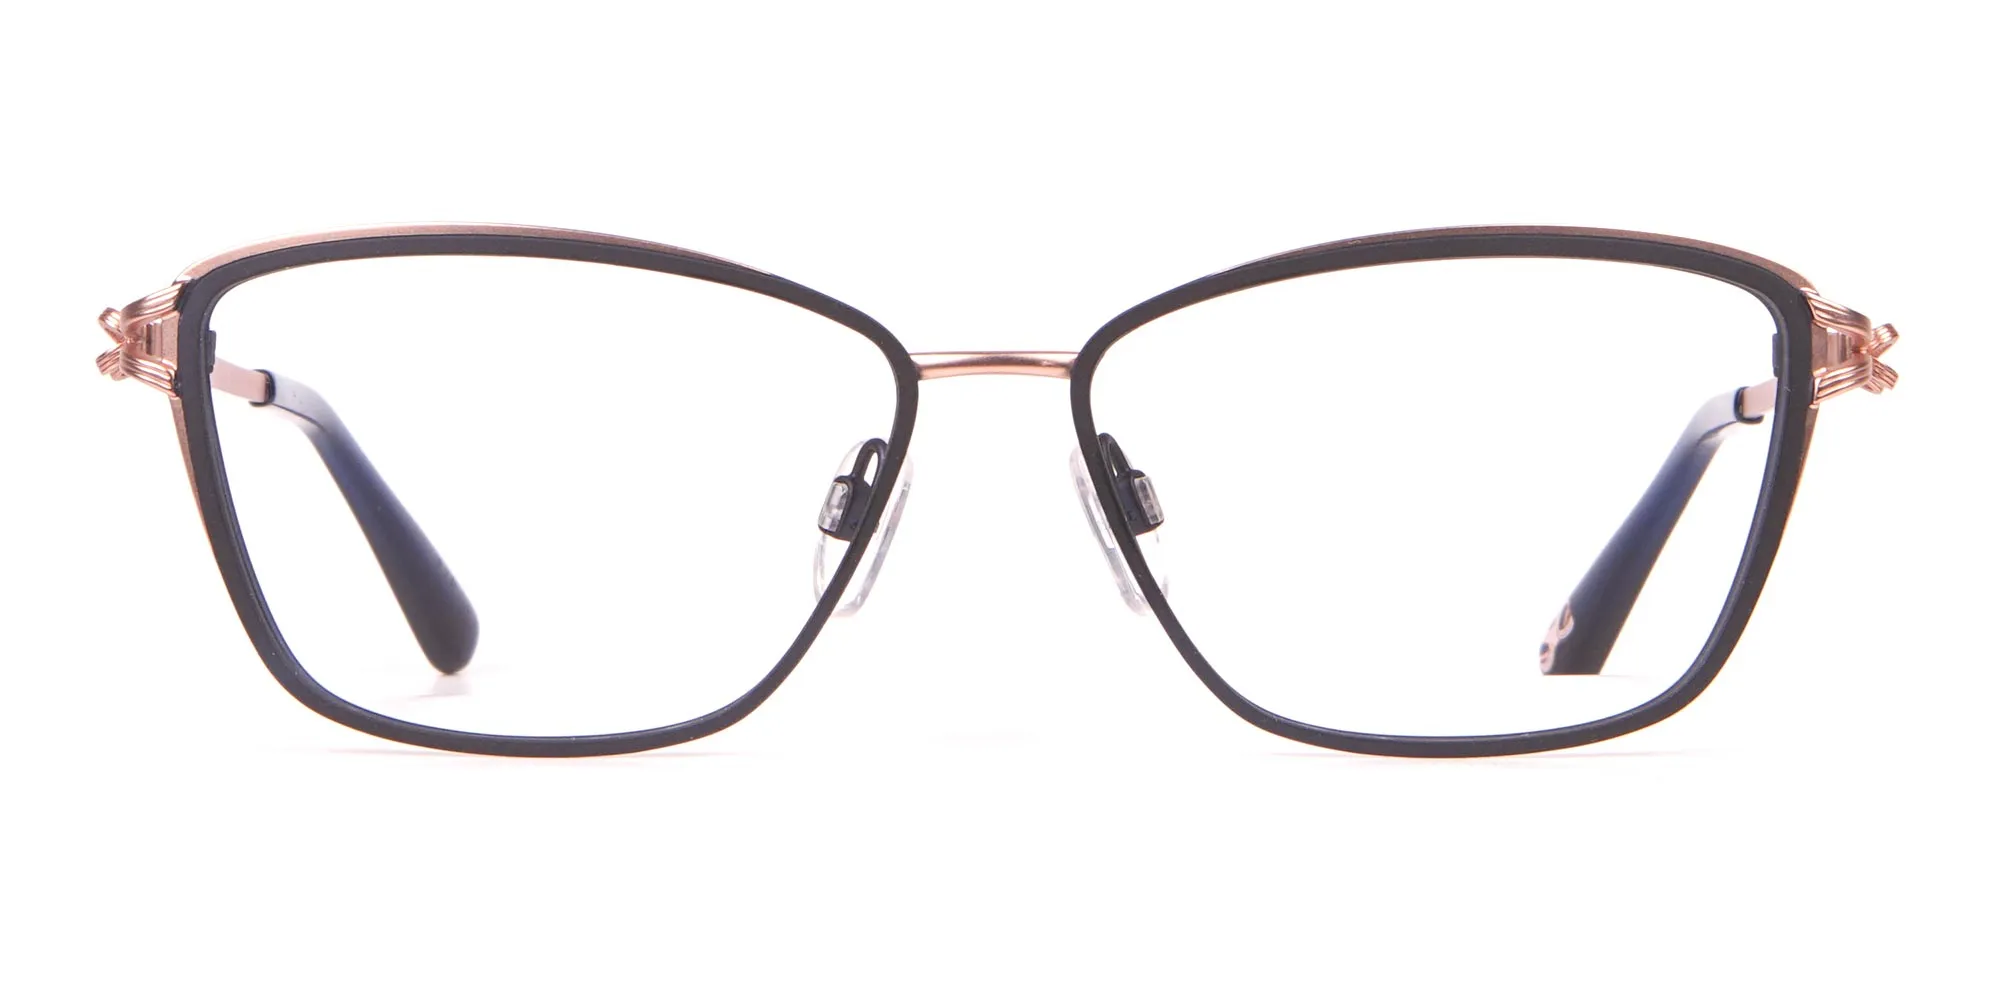 Ted Baker TB2245 Tula Women Classic Cateye Glasses Navy-2